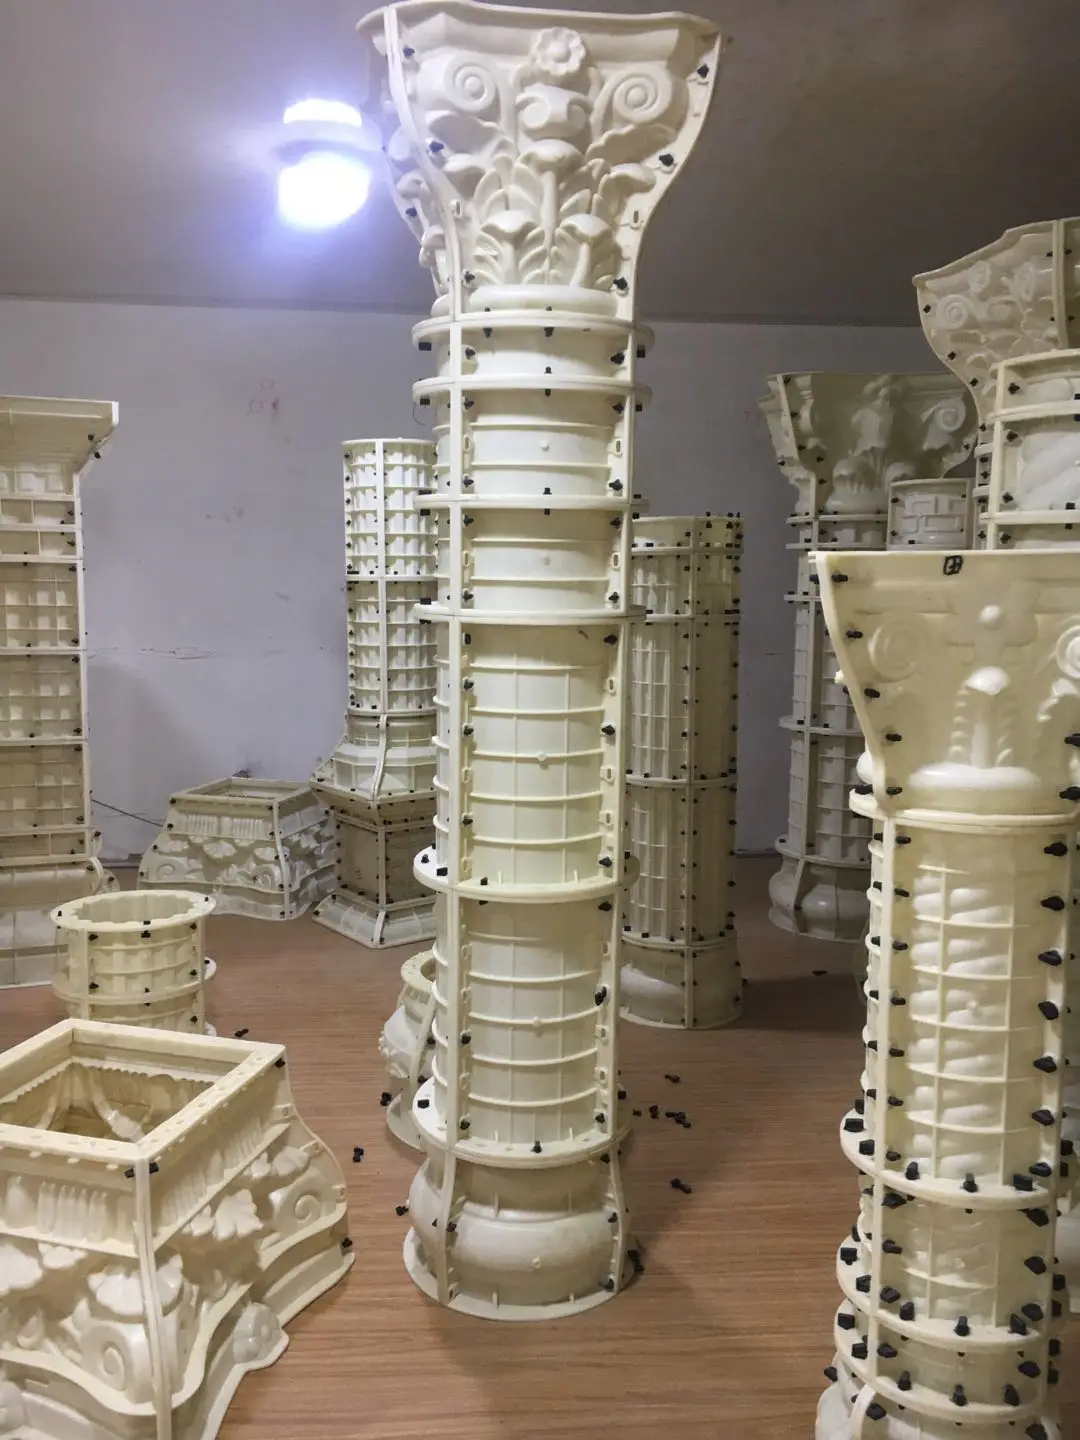 
20cm 9 inches diameter Round Precast Decorative Concrete Roman column pillar plastic mold with smooth surface 